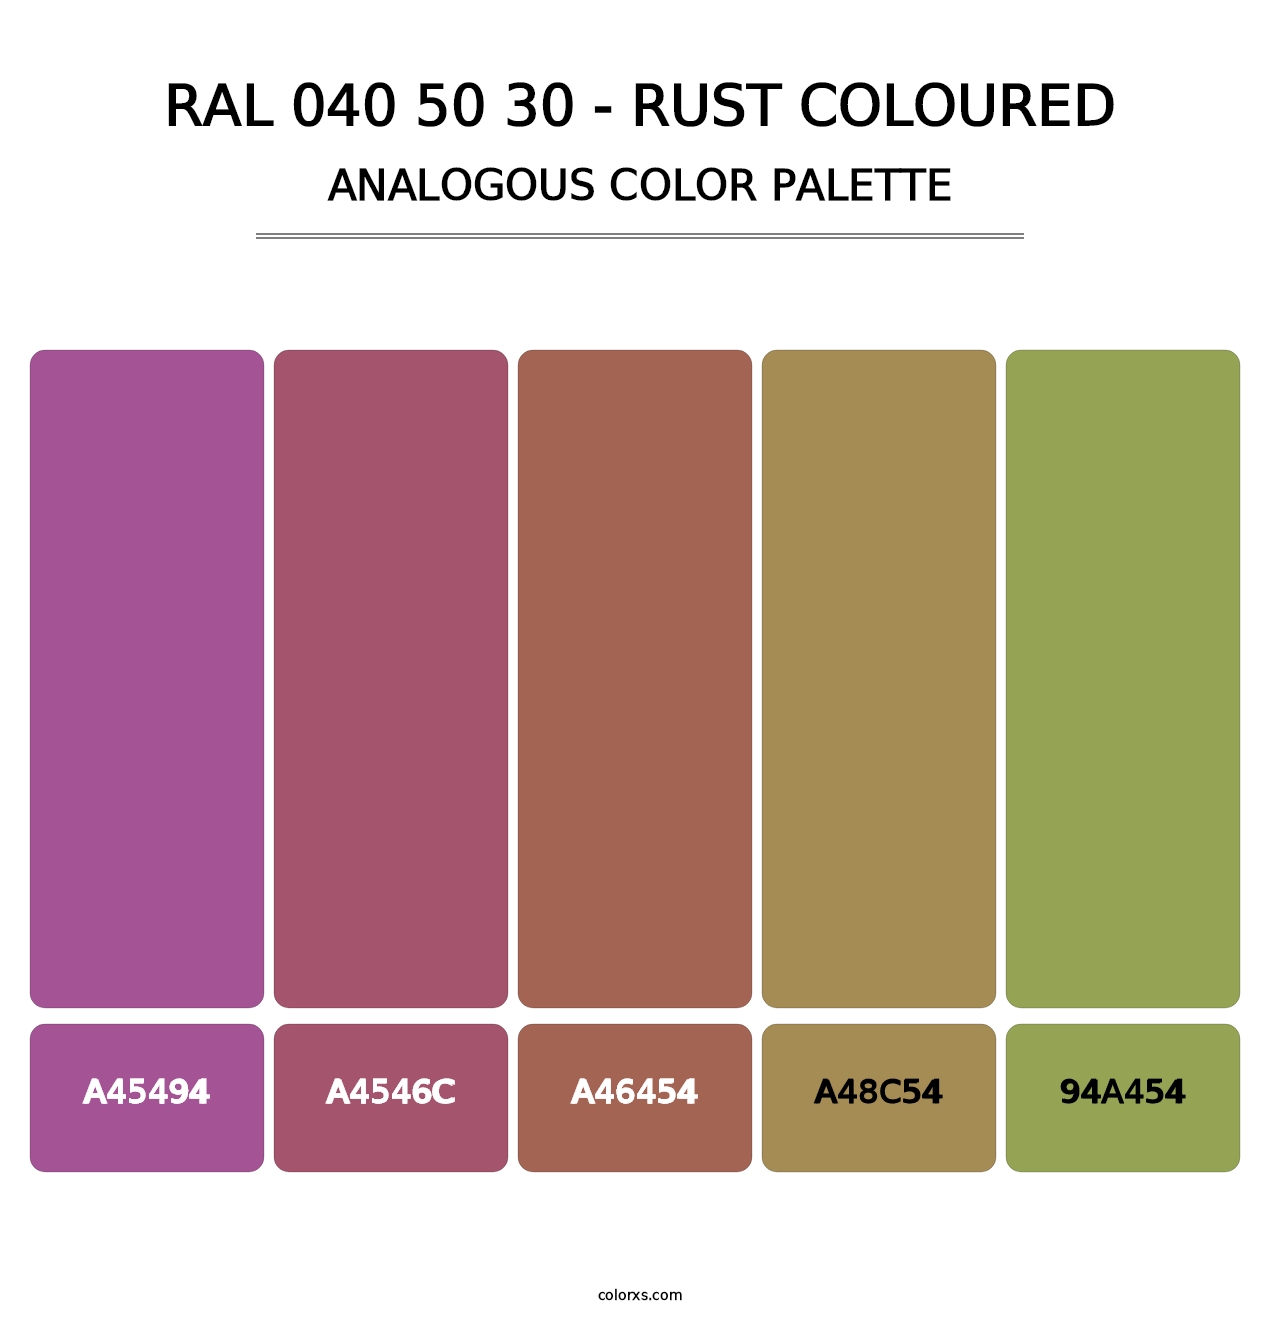 RAL 040 50 30 - Rust Coloured - Analogous Color Palette